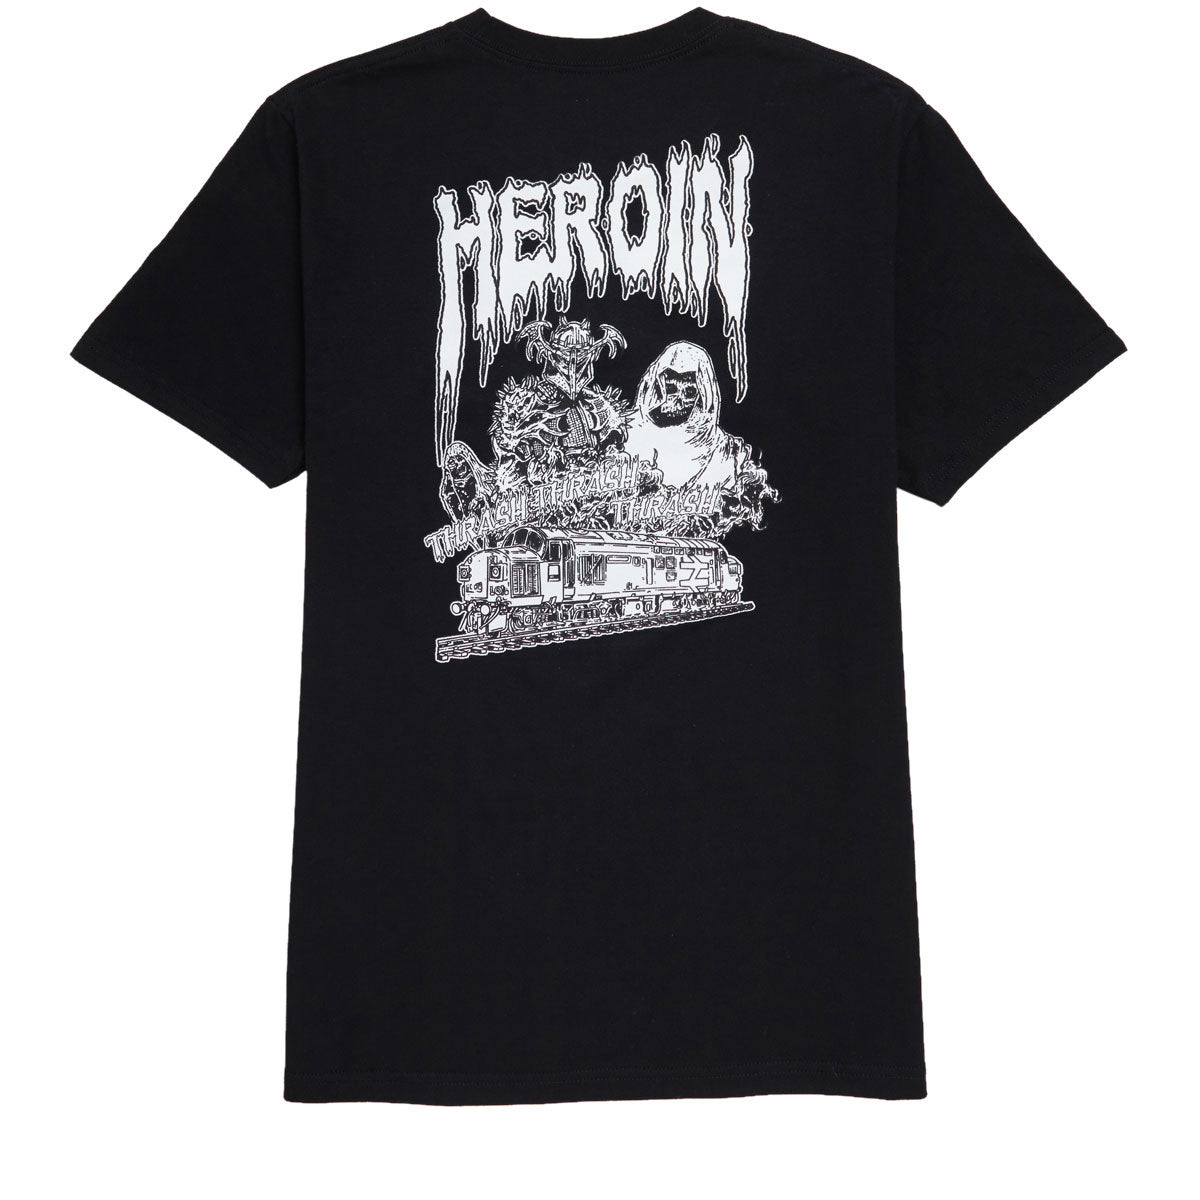 Heroin Ghost Train T-Shirt - Black image 1